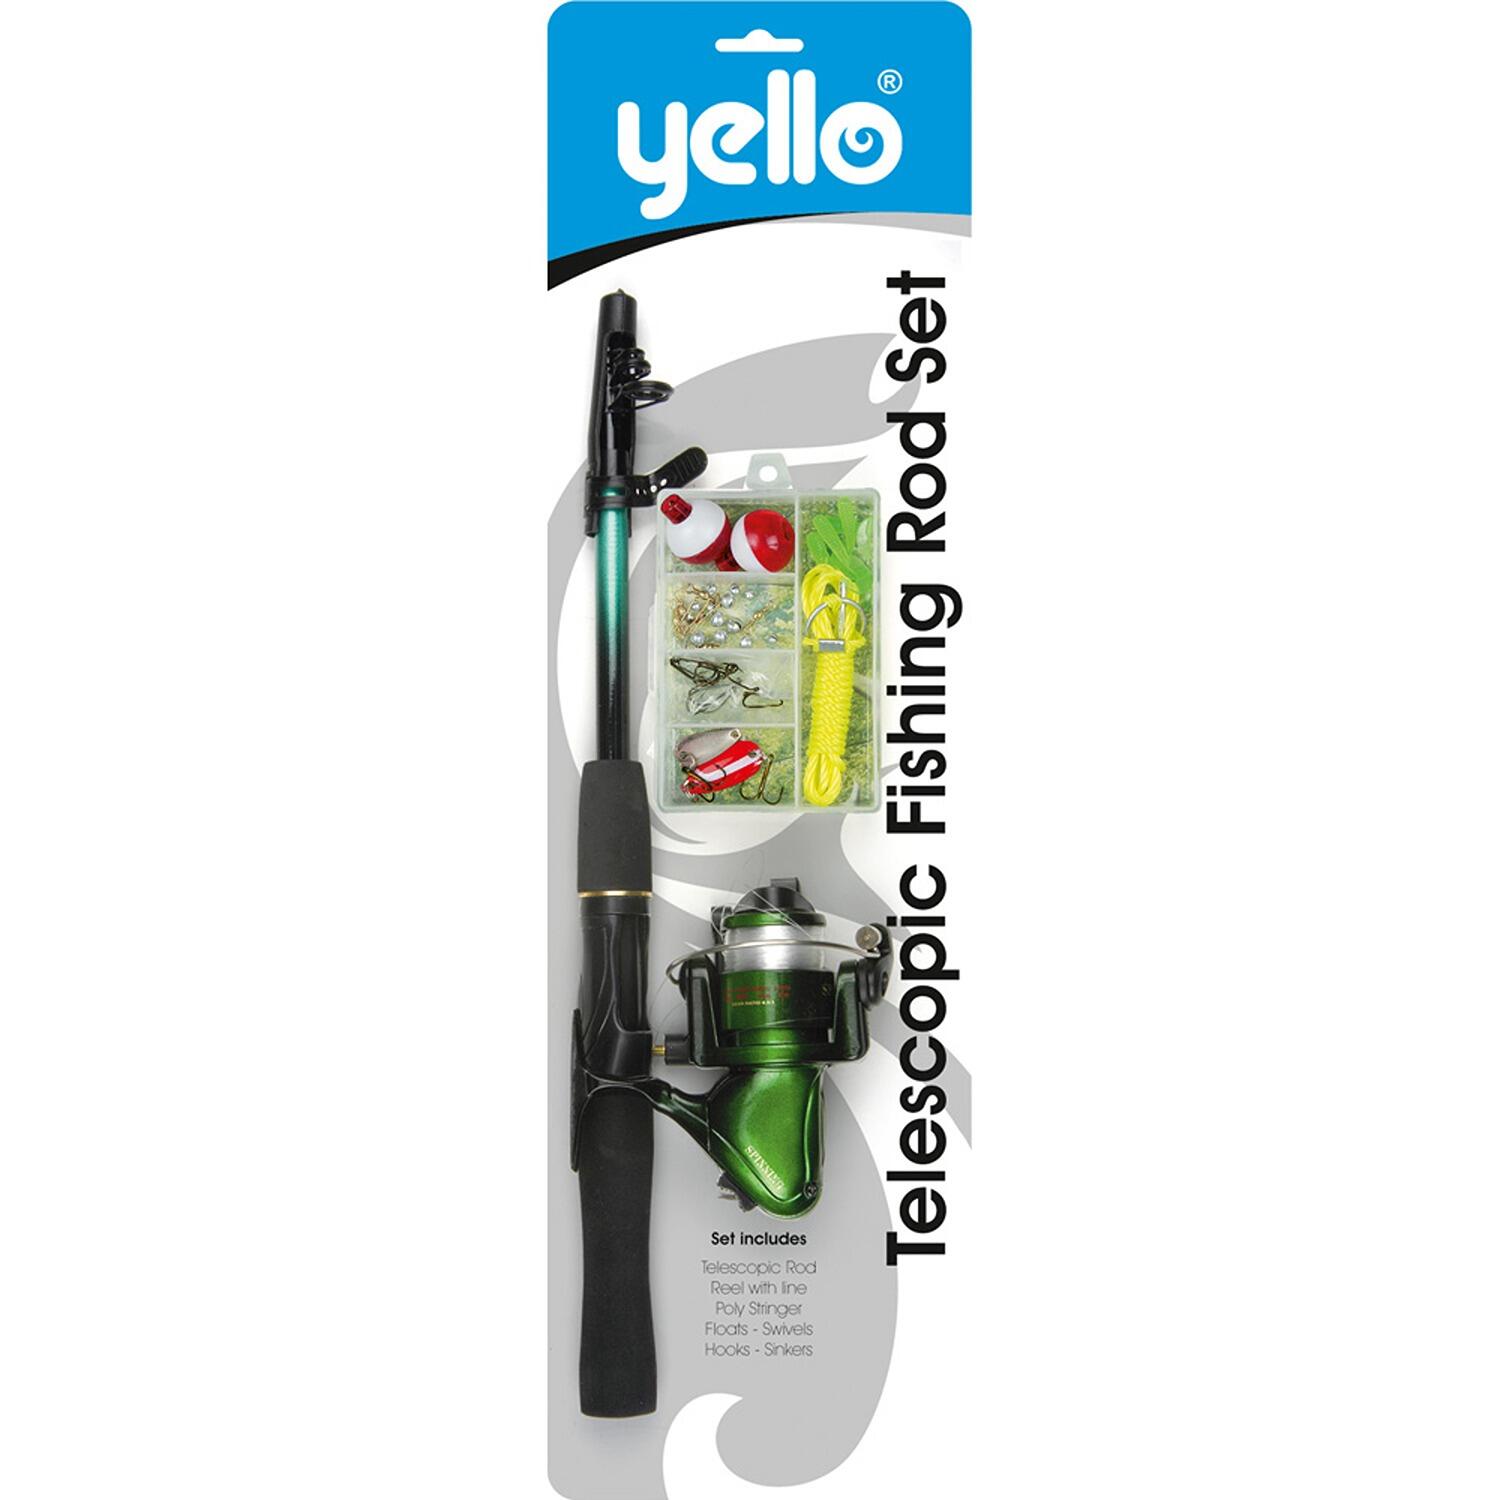 Yello Telescopic Junior Fishing Rod Set YELLO